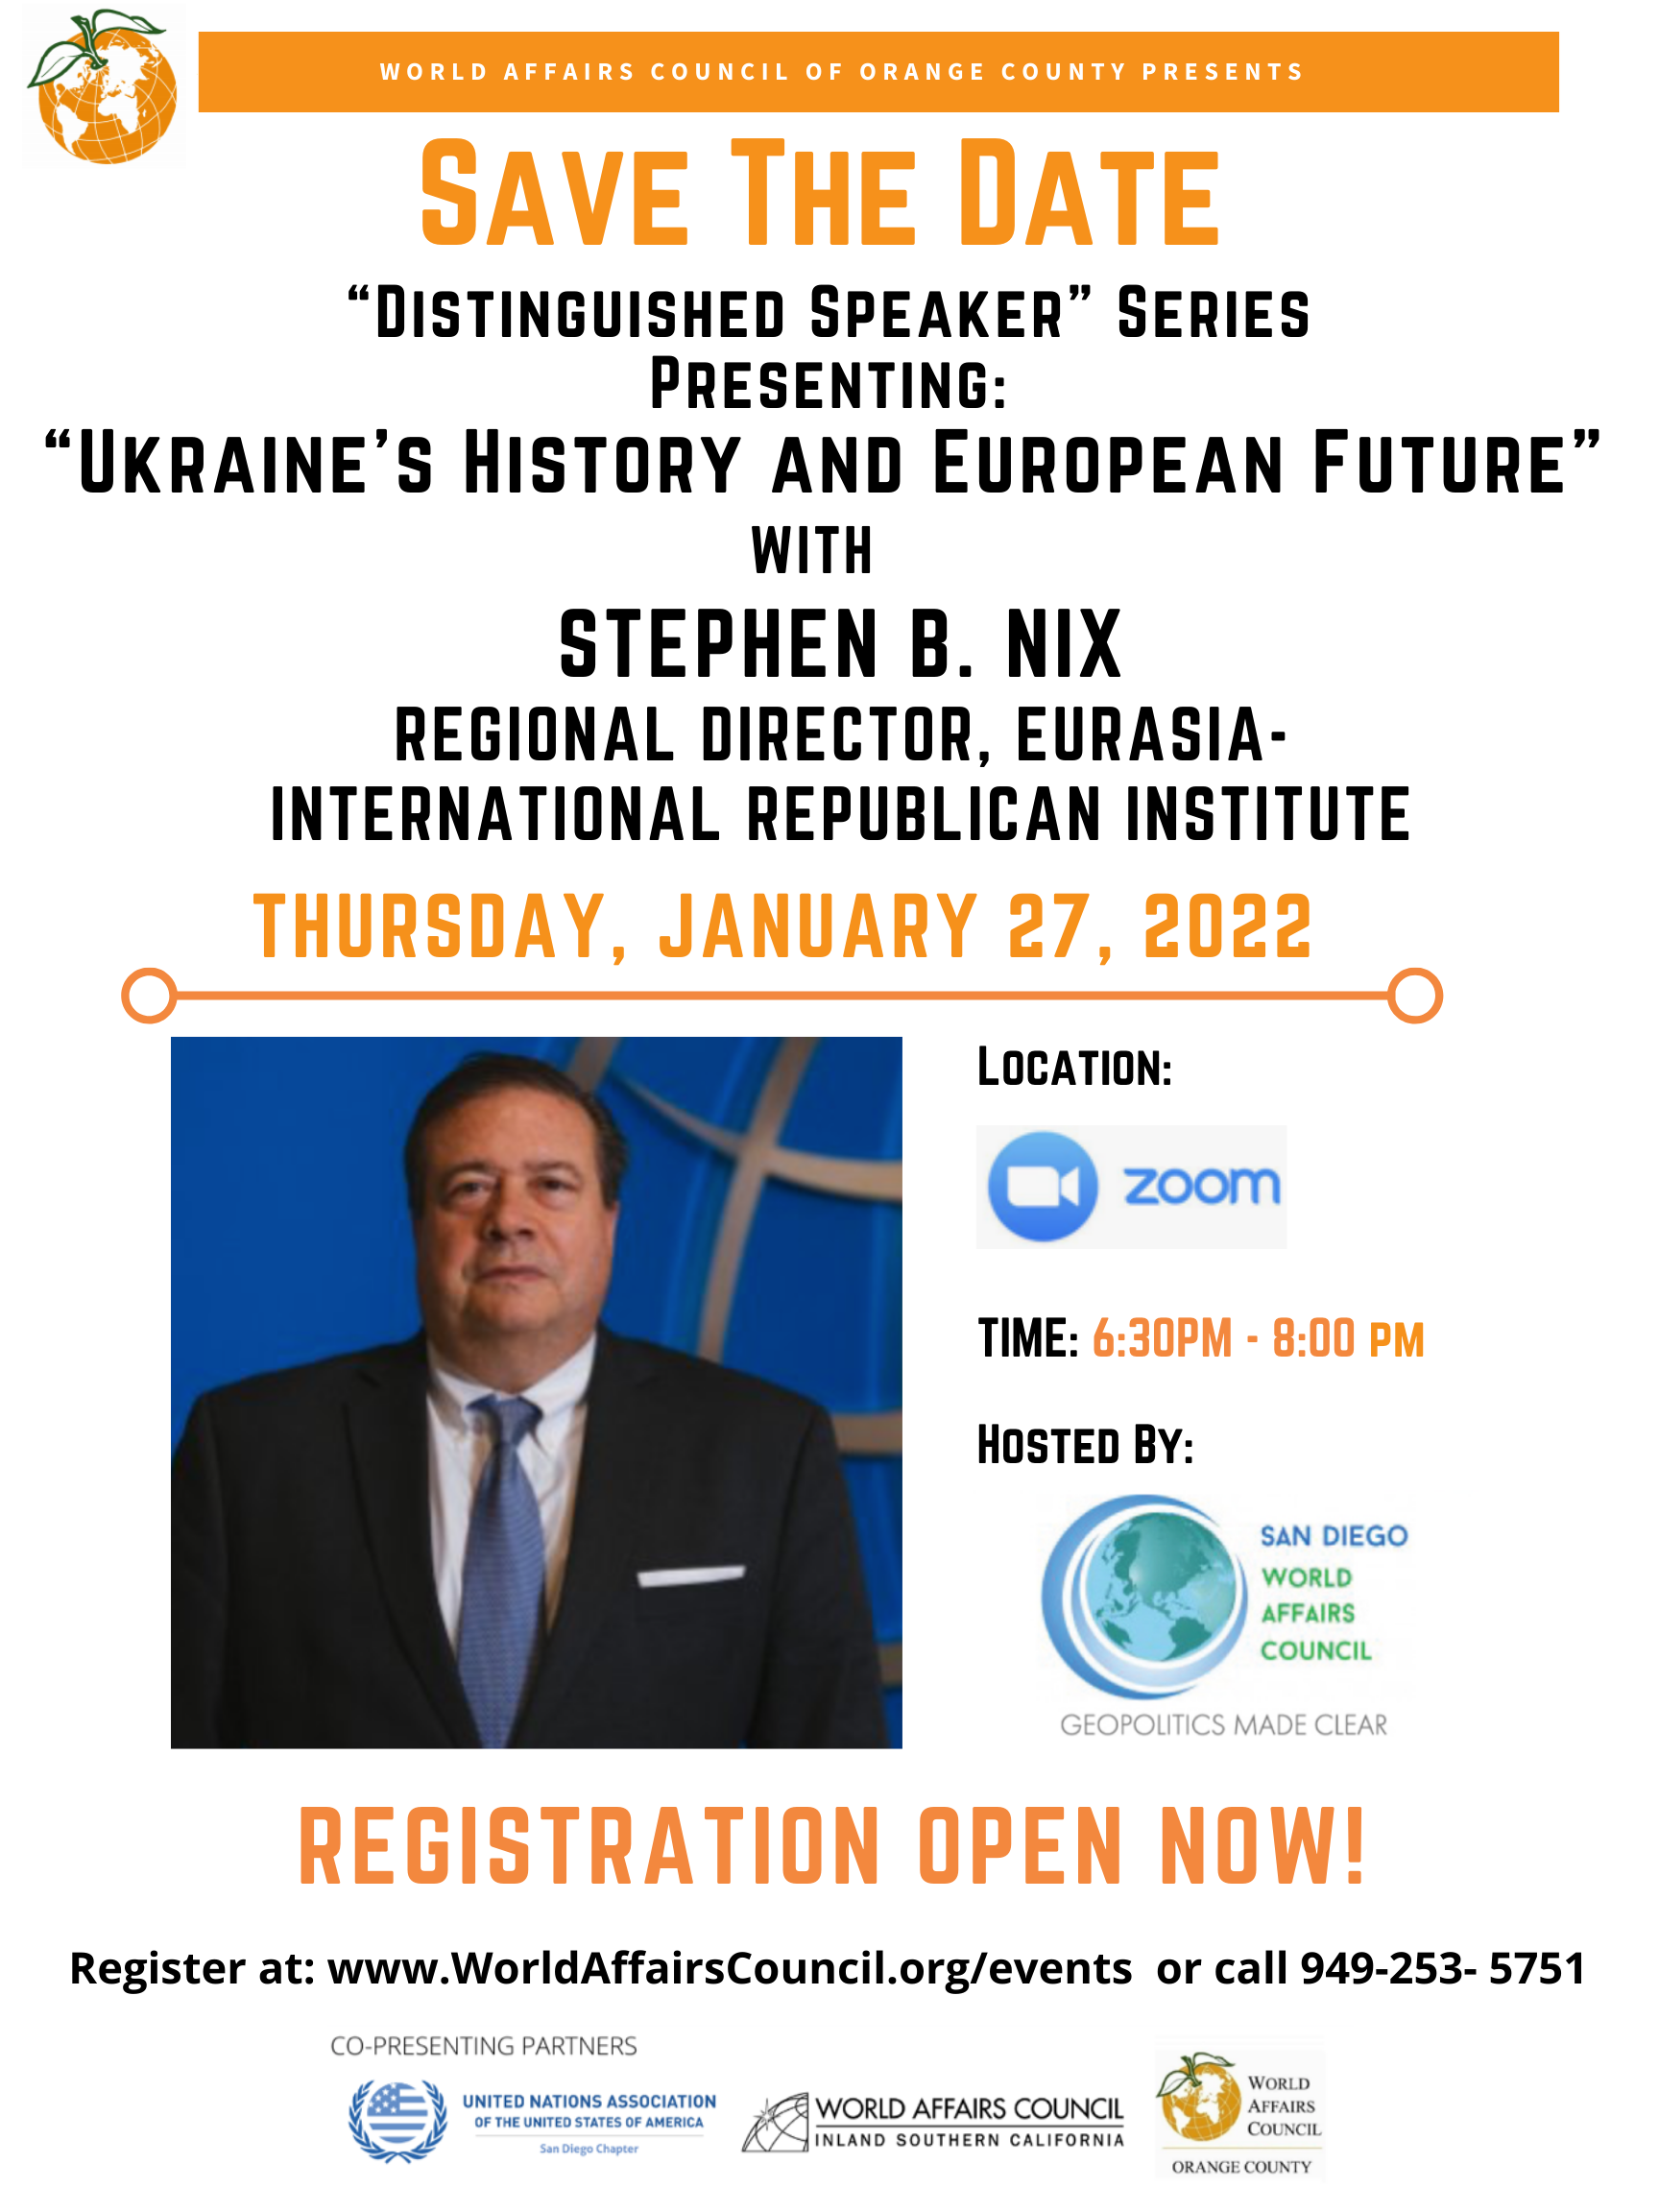 Distinguished Speaker "Soft Power" Series - Stephen B. Nix - "Ukraine’s History and European Future"